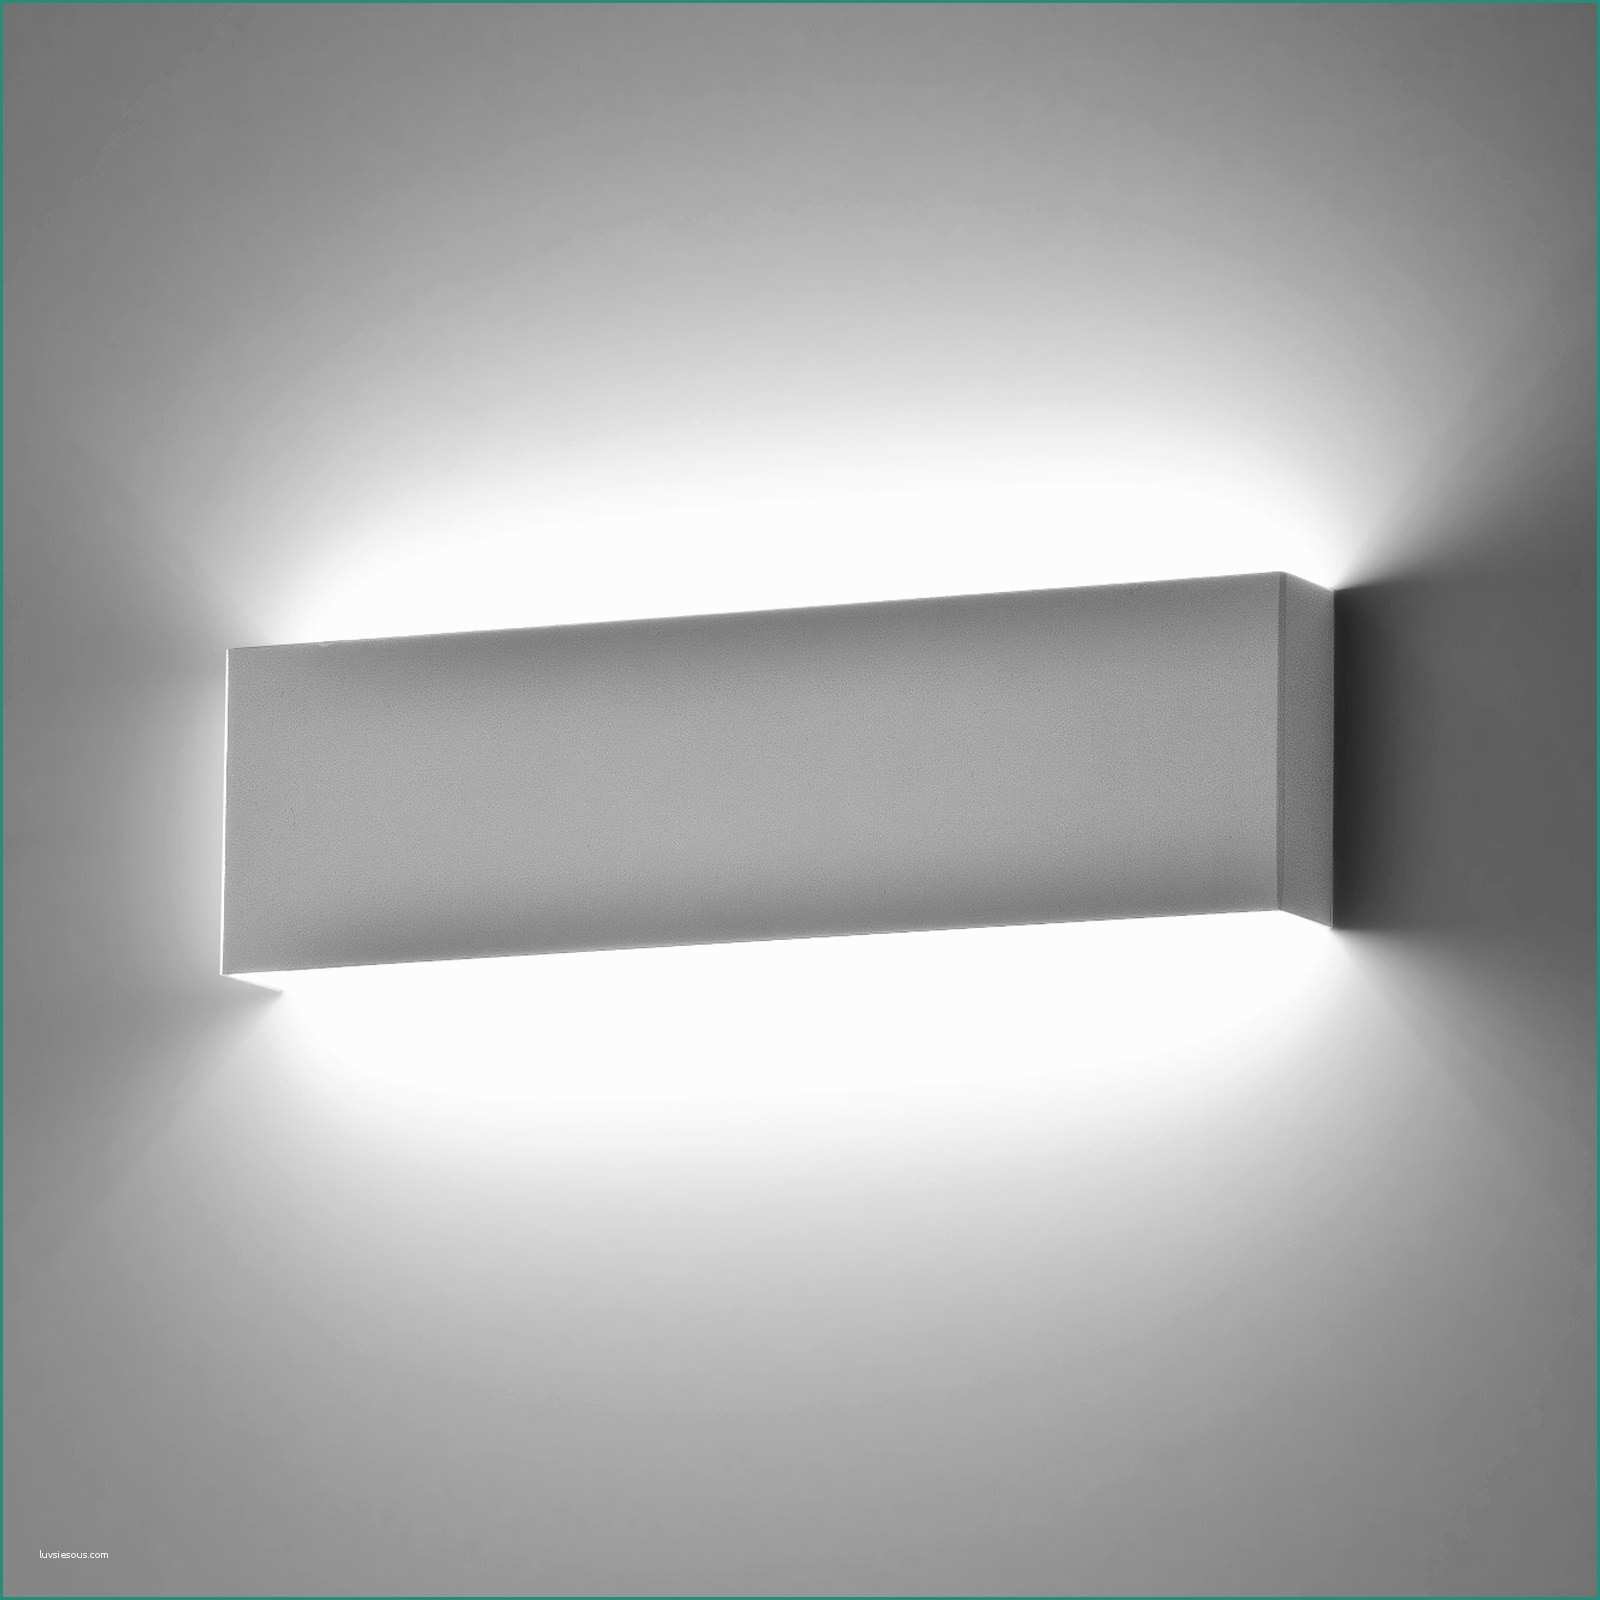 Profilo Alluminio Led Leroy Merlin E Applique Lampada Da Parete A Led Moderno Luce Calda Bianco